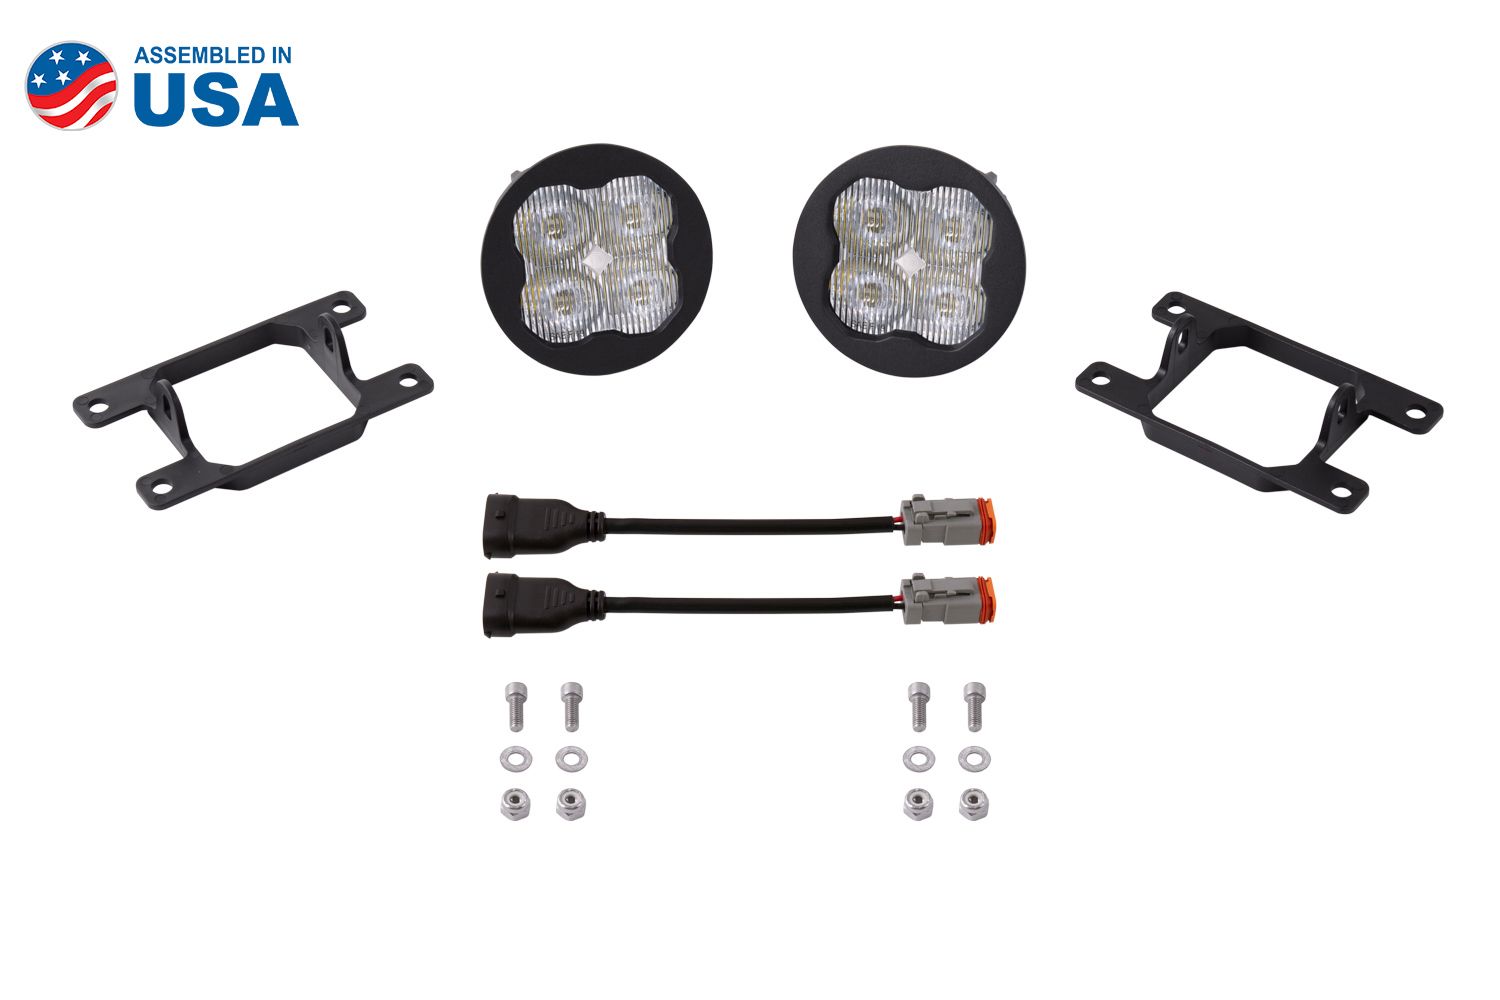 SS3 LED Fog Light Kit for 2013-2017 Acura ILX Diode Dynamics-